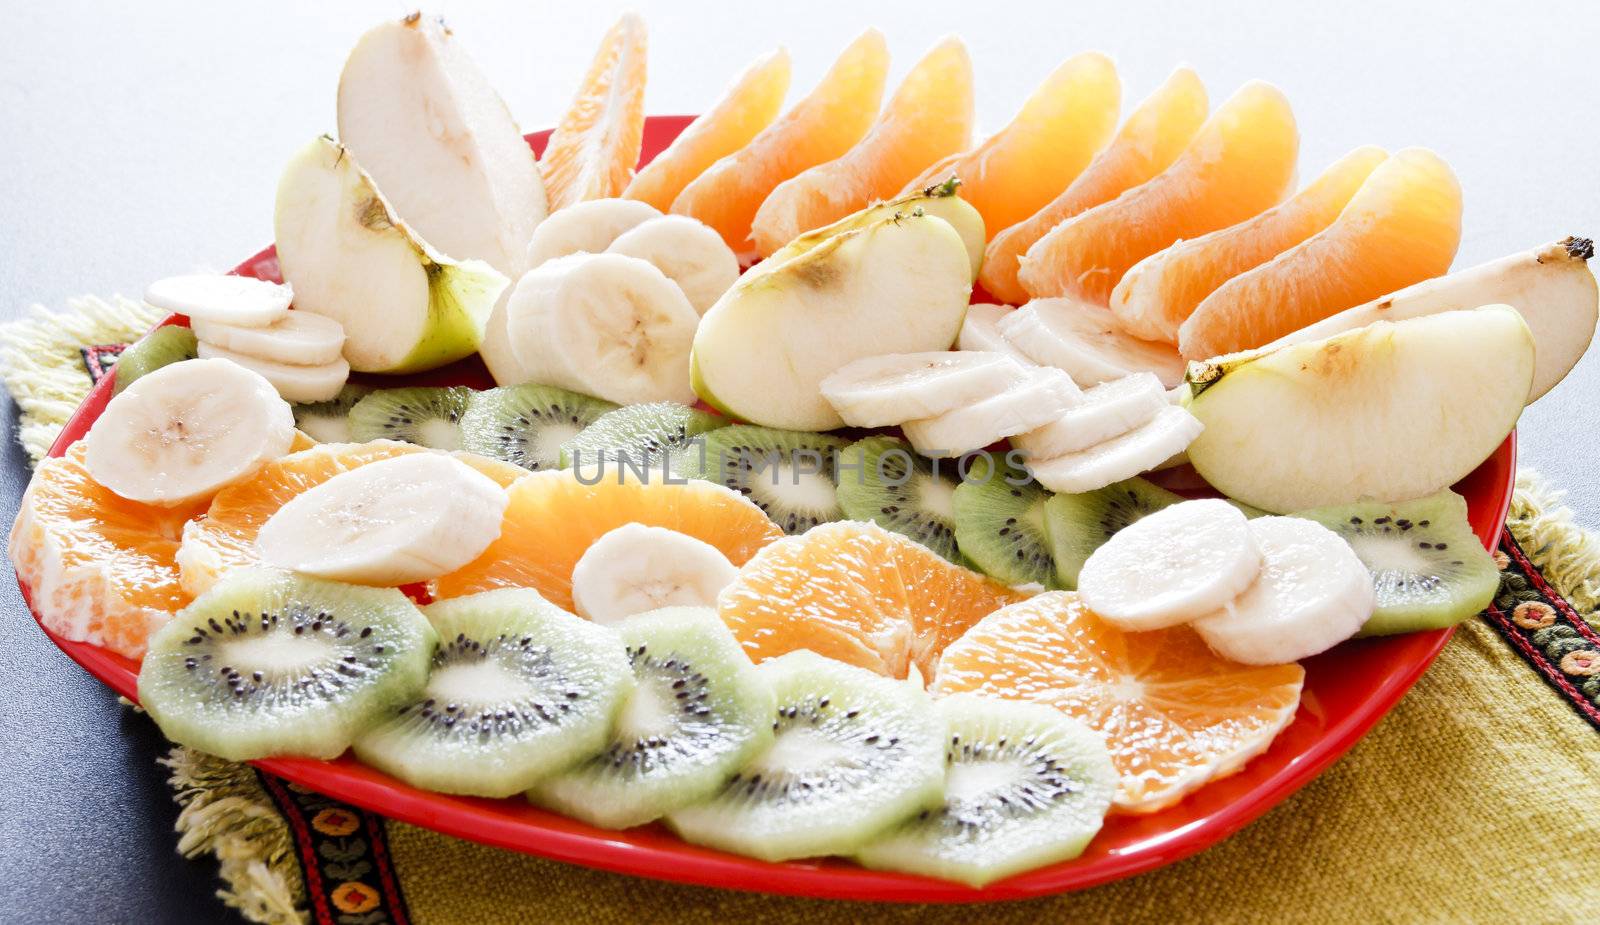 Fresh fruits on plate: apples, pears, bananas, kiwi, oranges